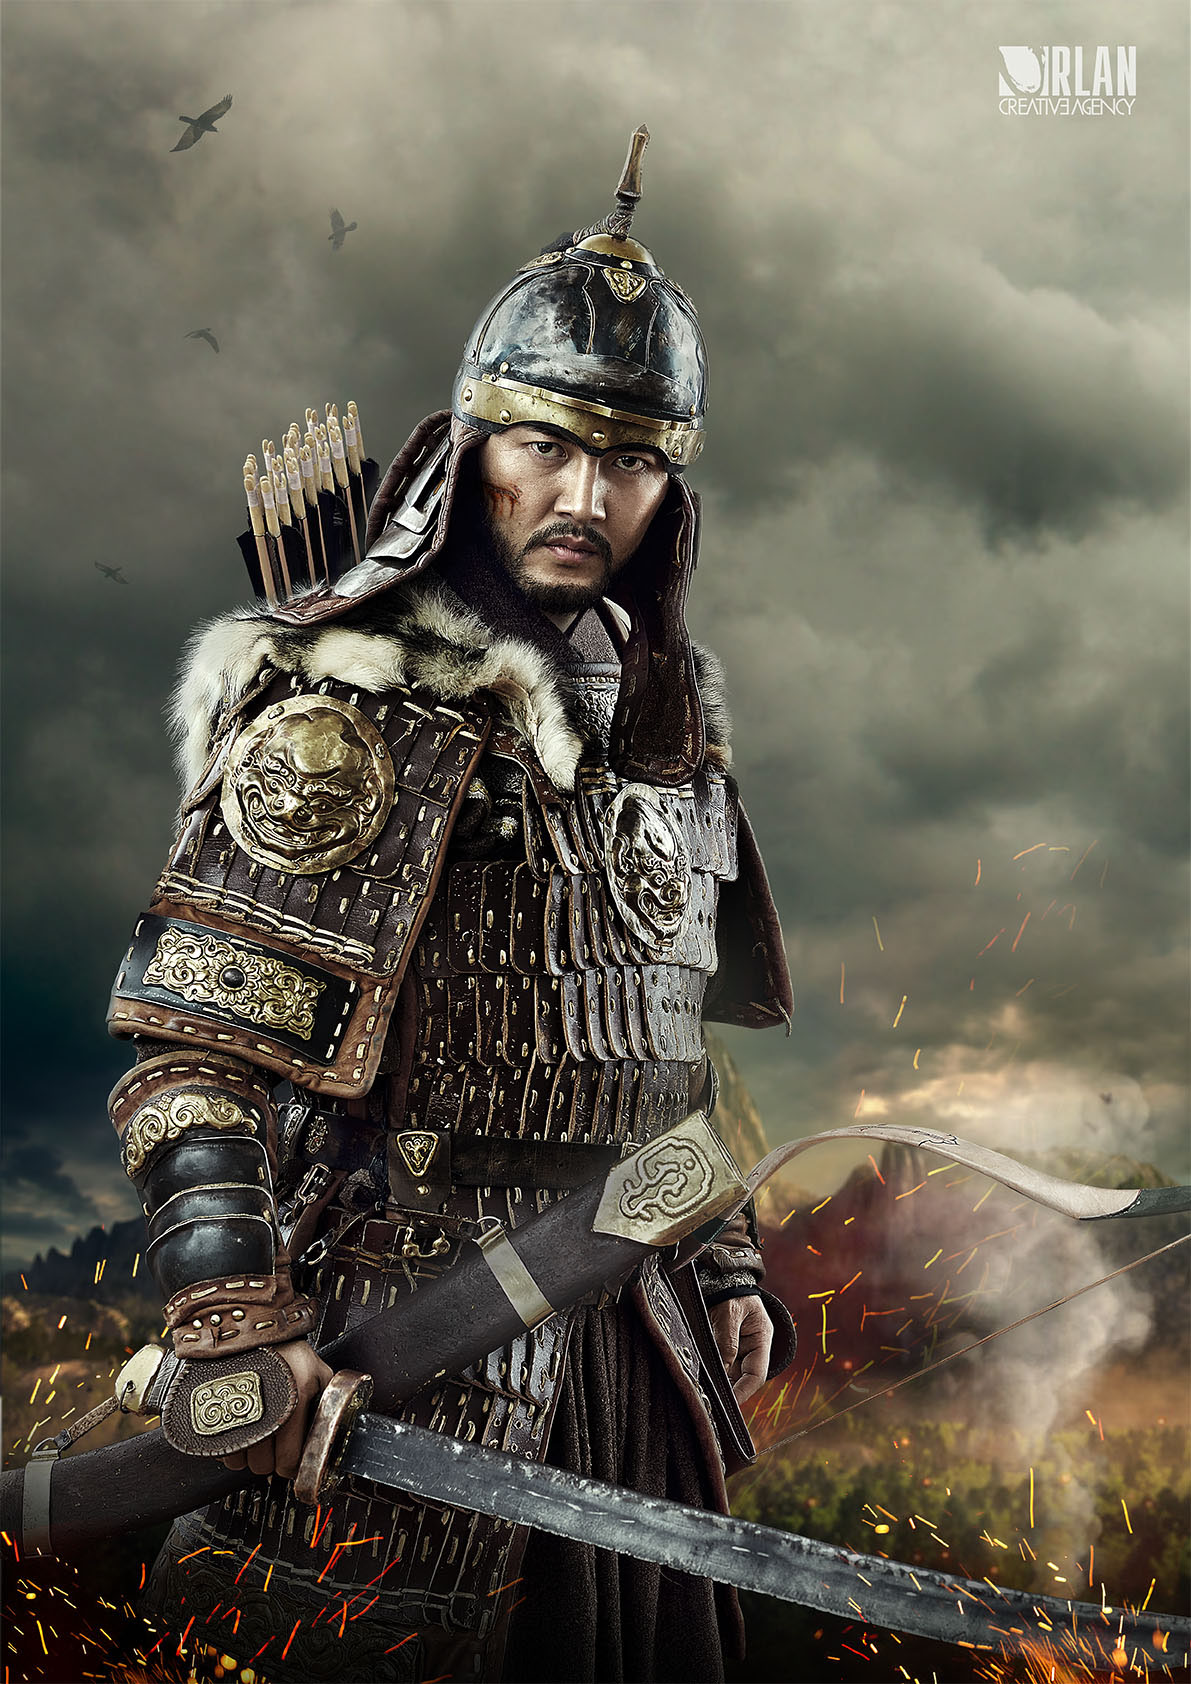 mongol mongolia mongolian Hero battur actor movie poster Ganzo urlan